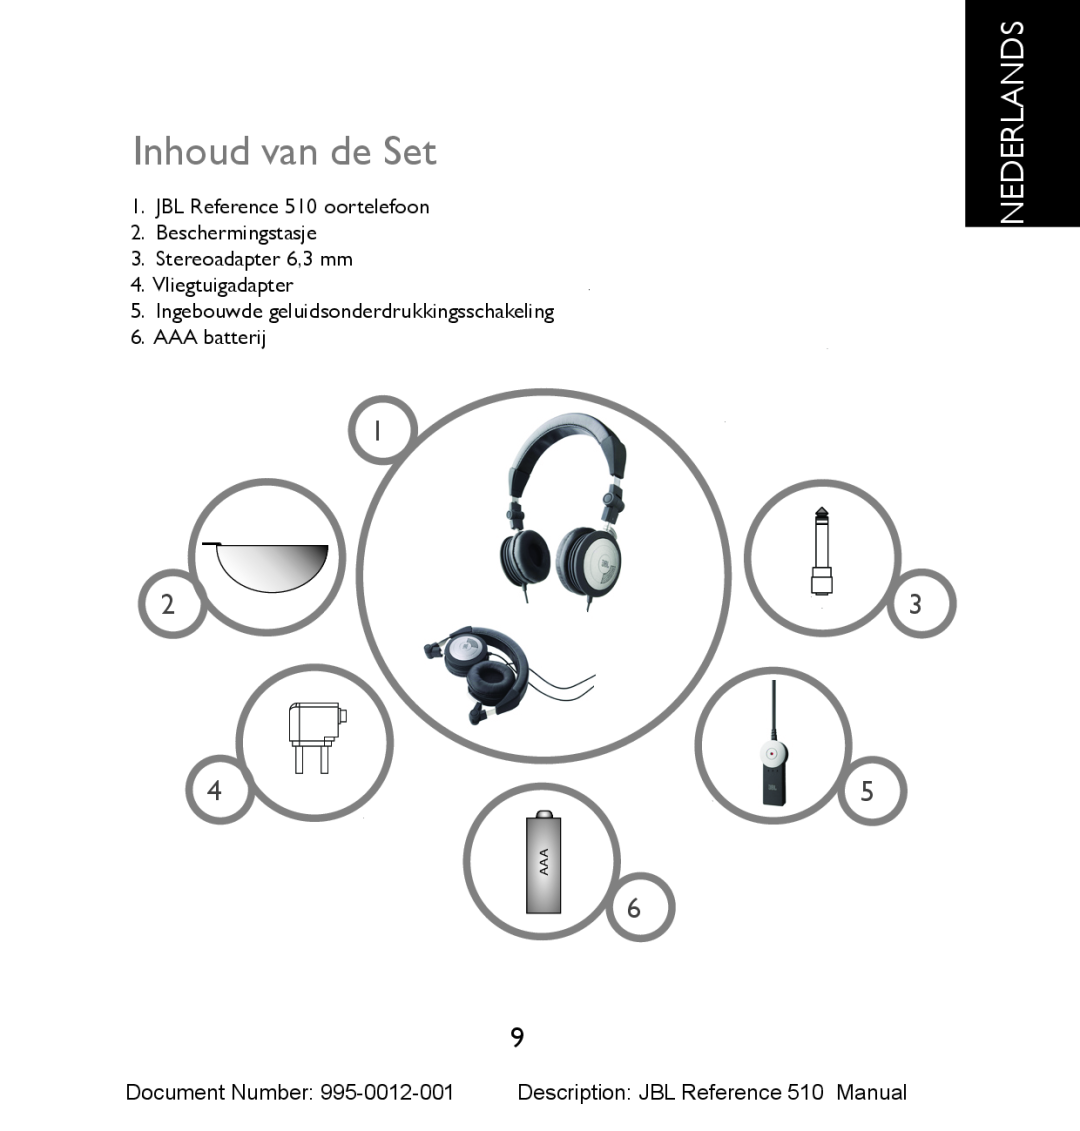 JBL manual Inhoud van de Set, Nederlands, JBL Reference 510 oortelefoon, Beschermingstasje 3.Stereoadapter 6,3 mm 